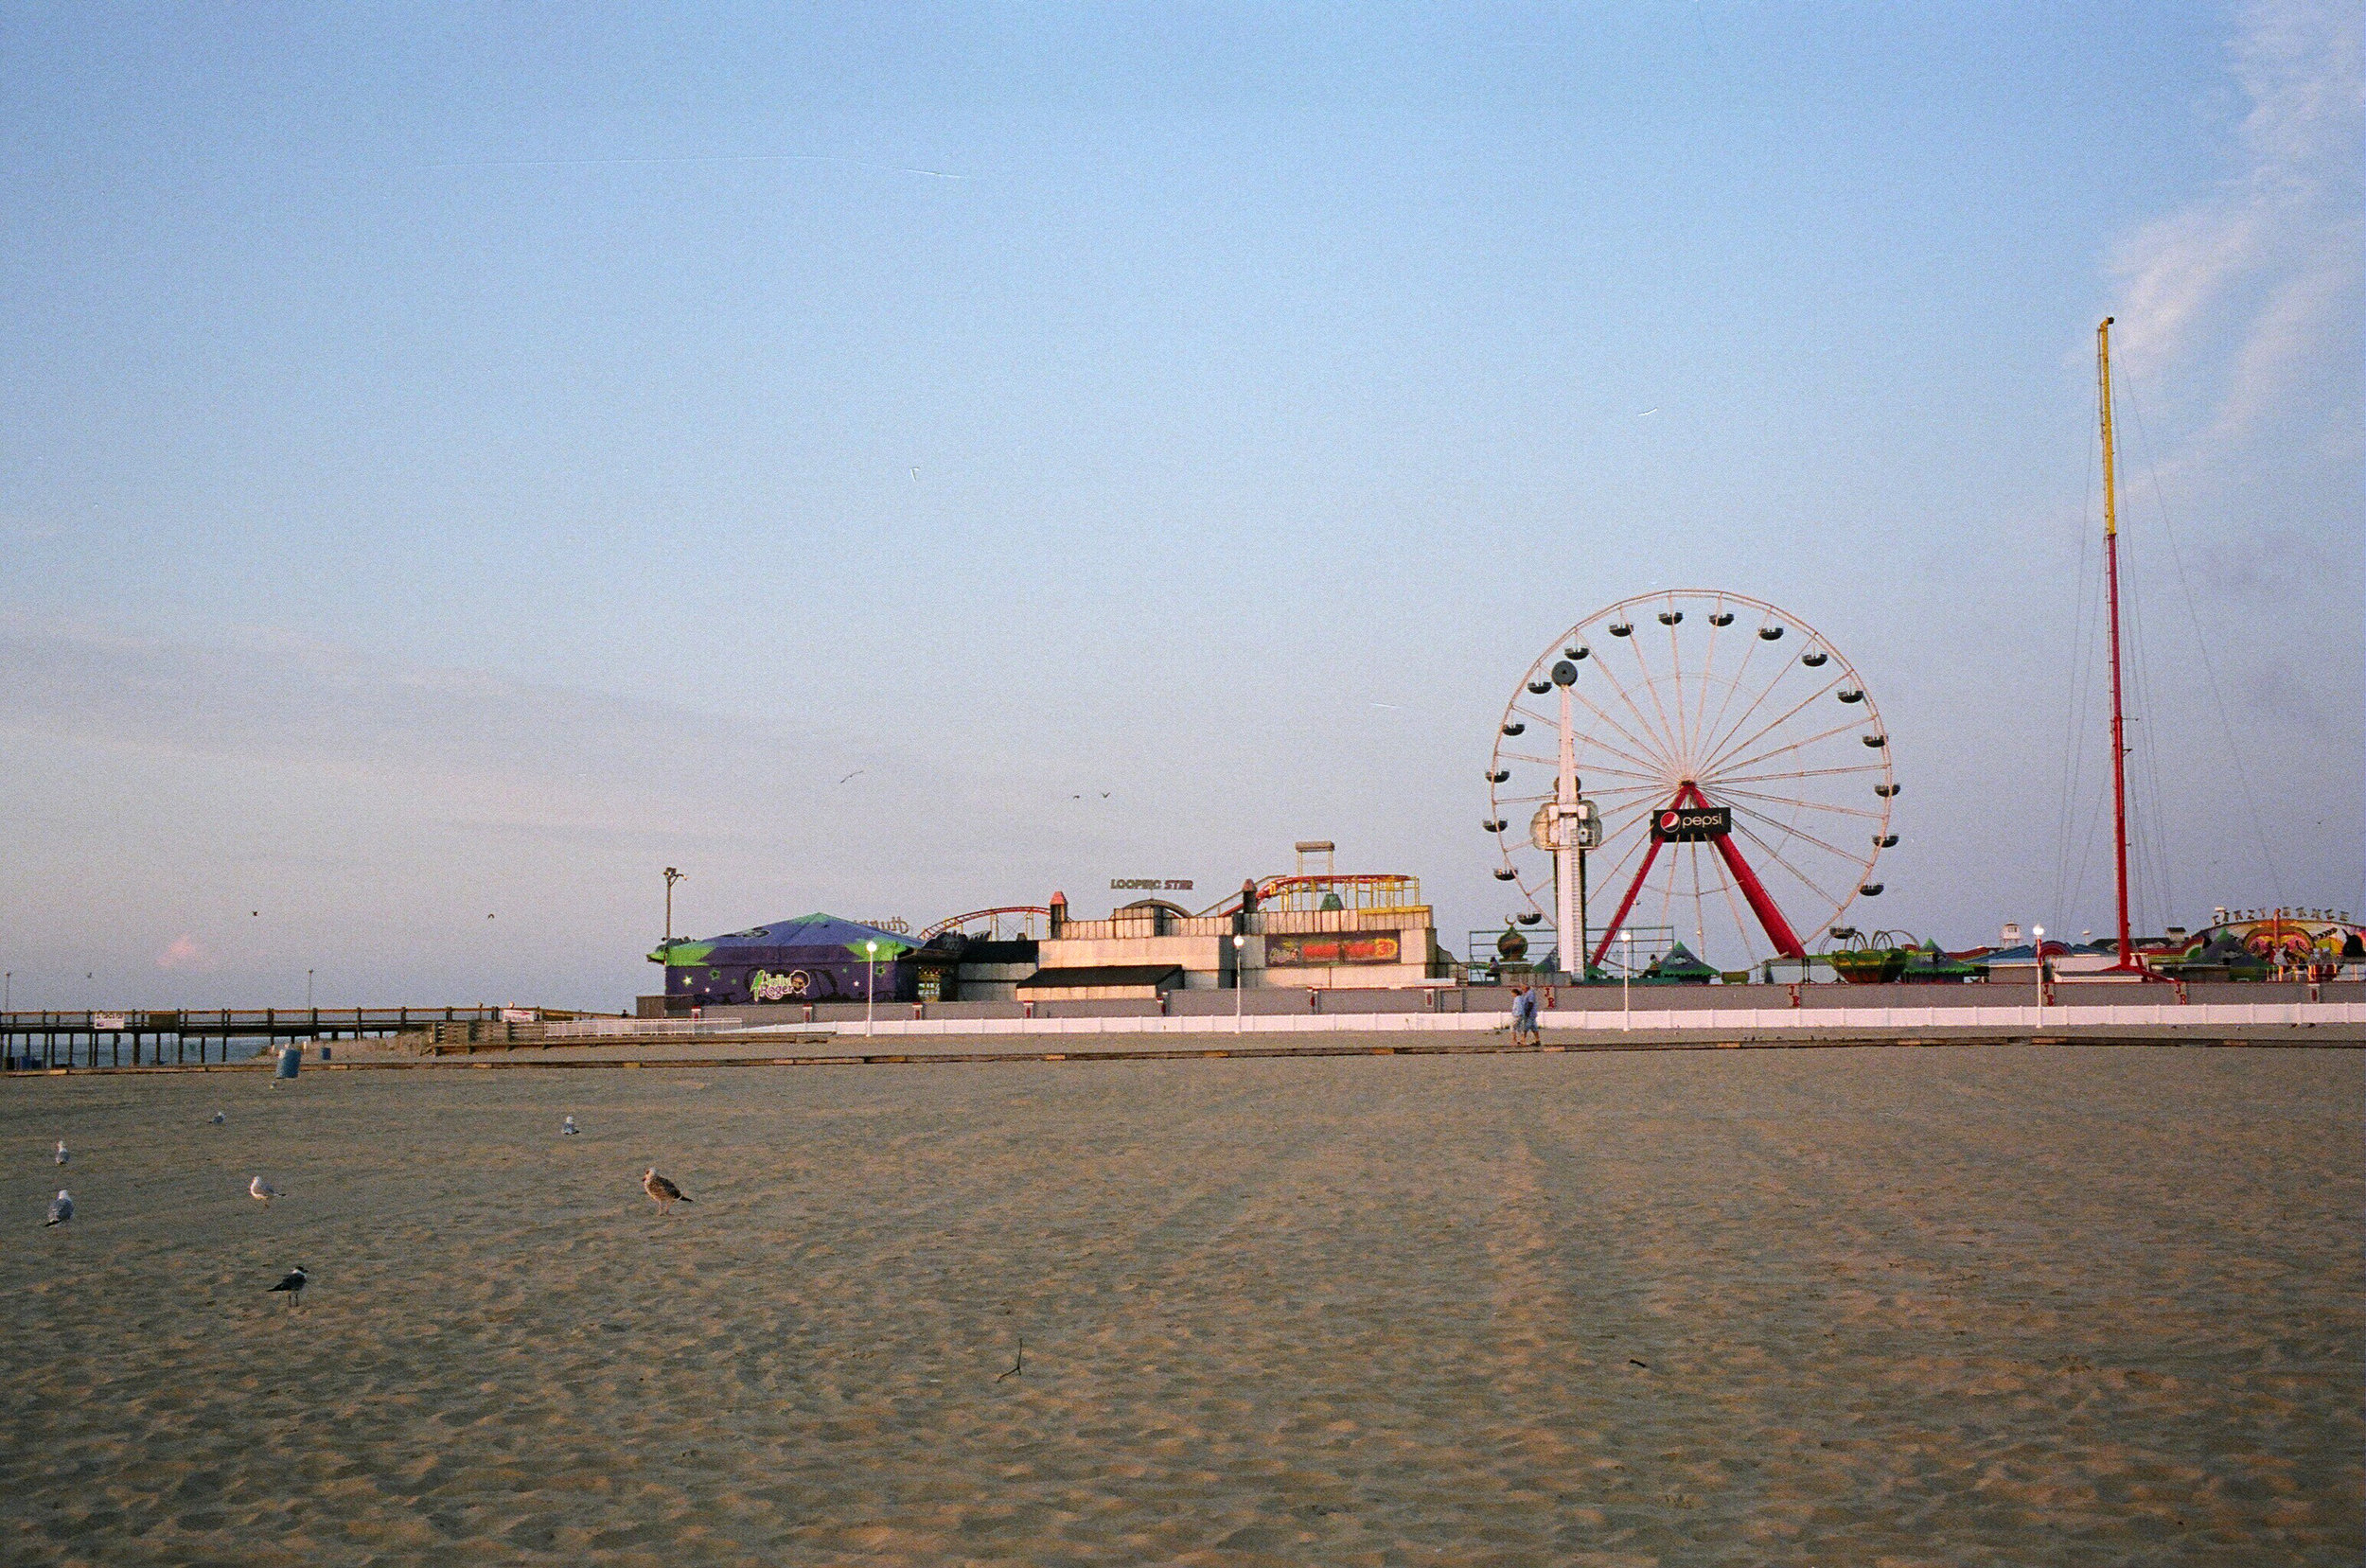 Ocean City Maryland Beach and Ferris Wheel.jpg